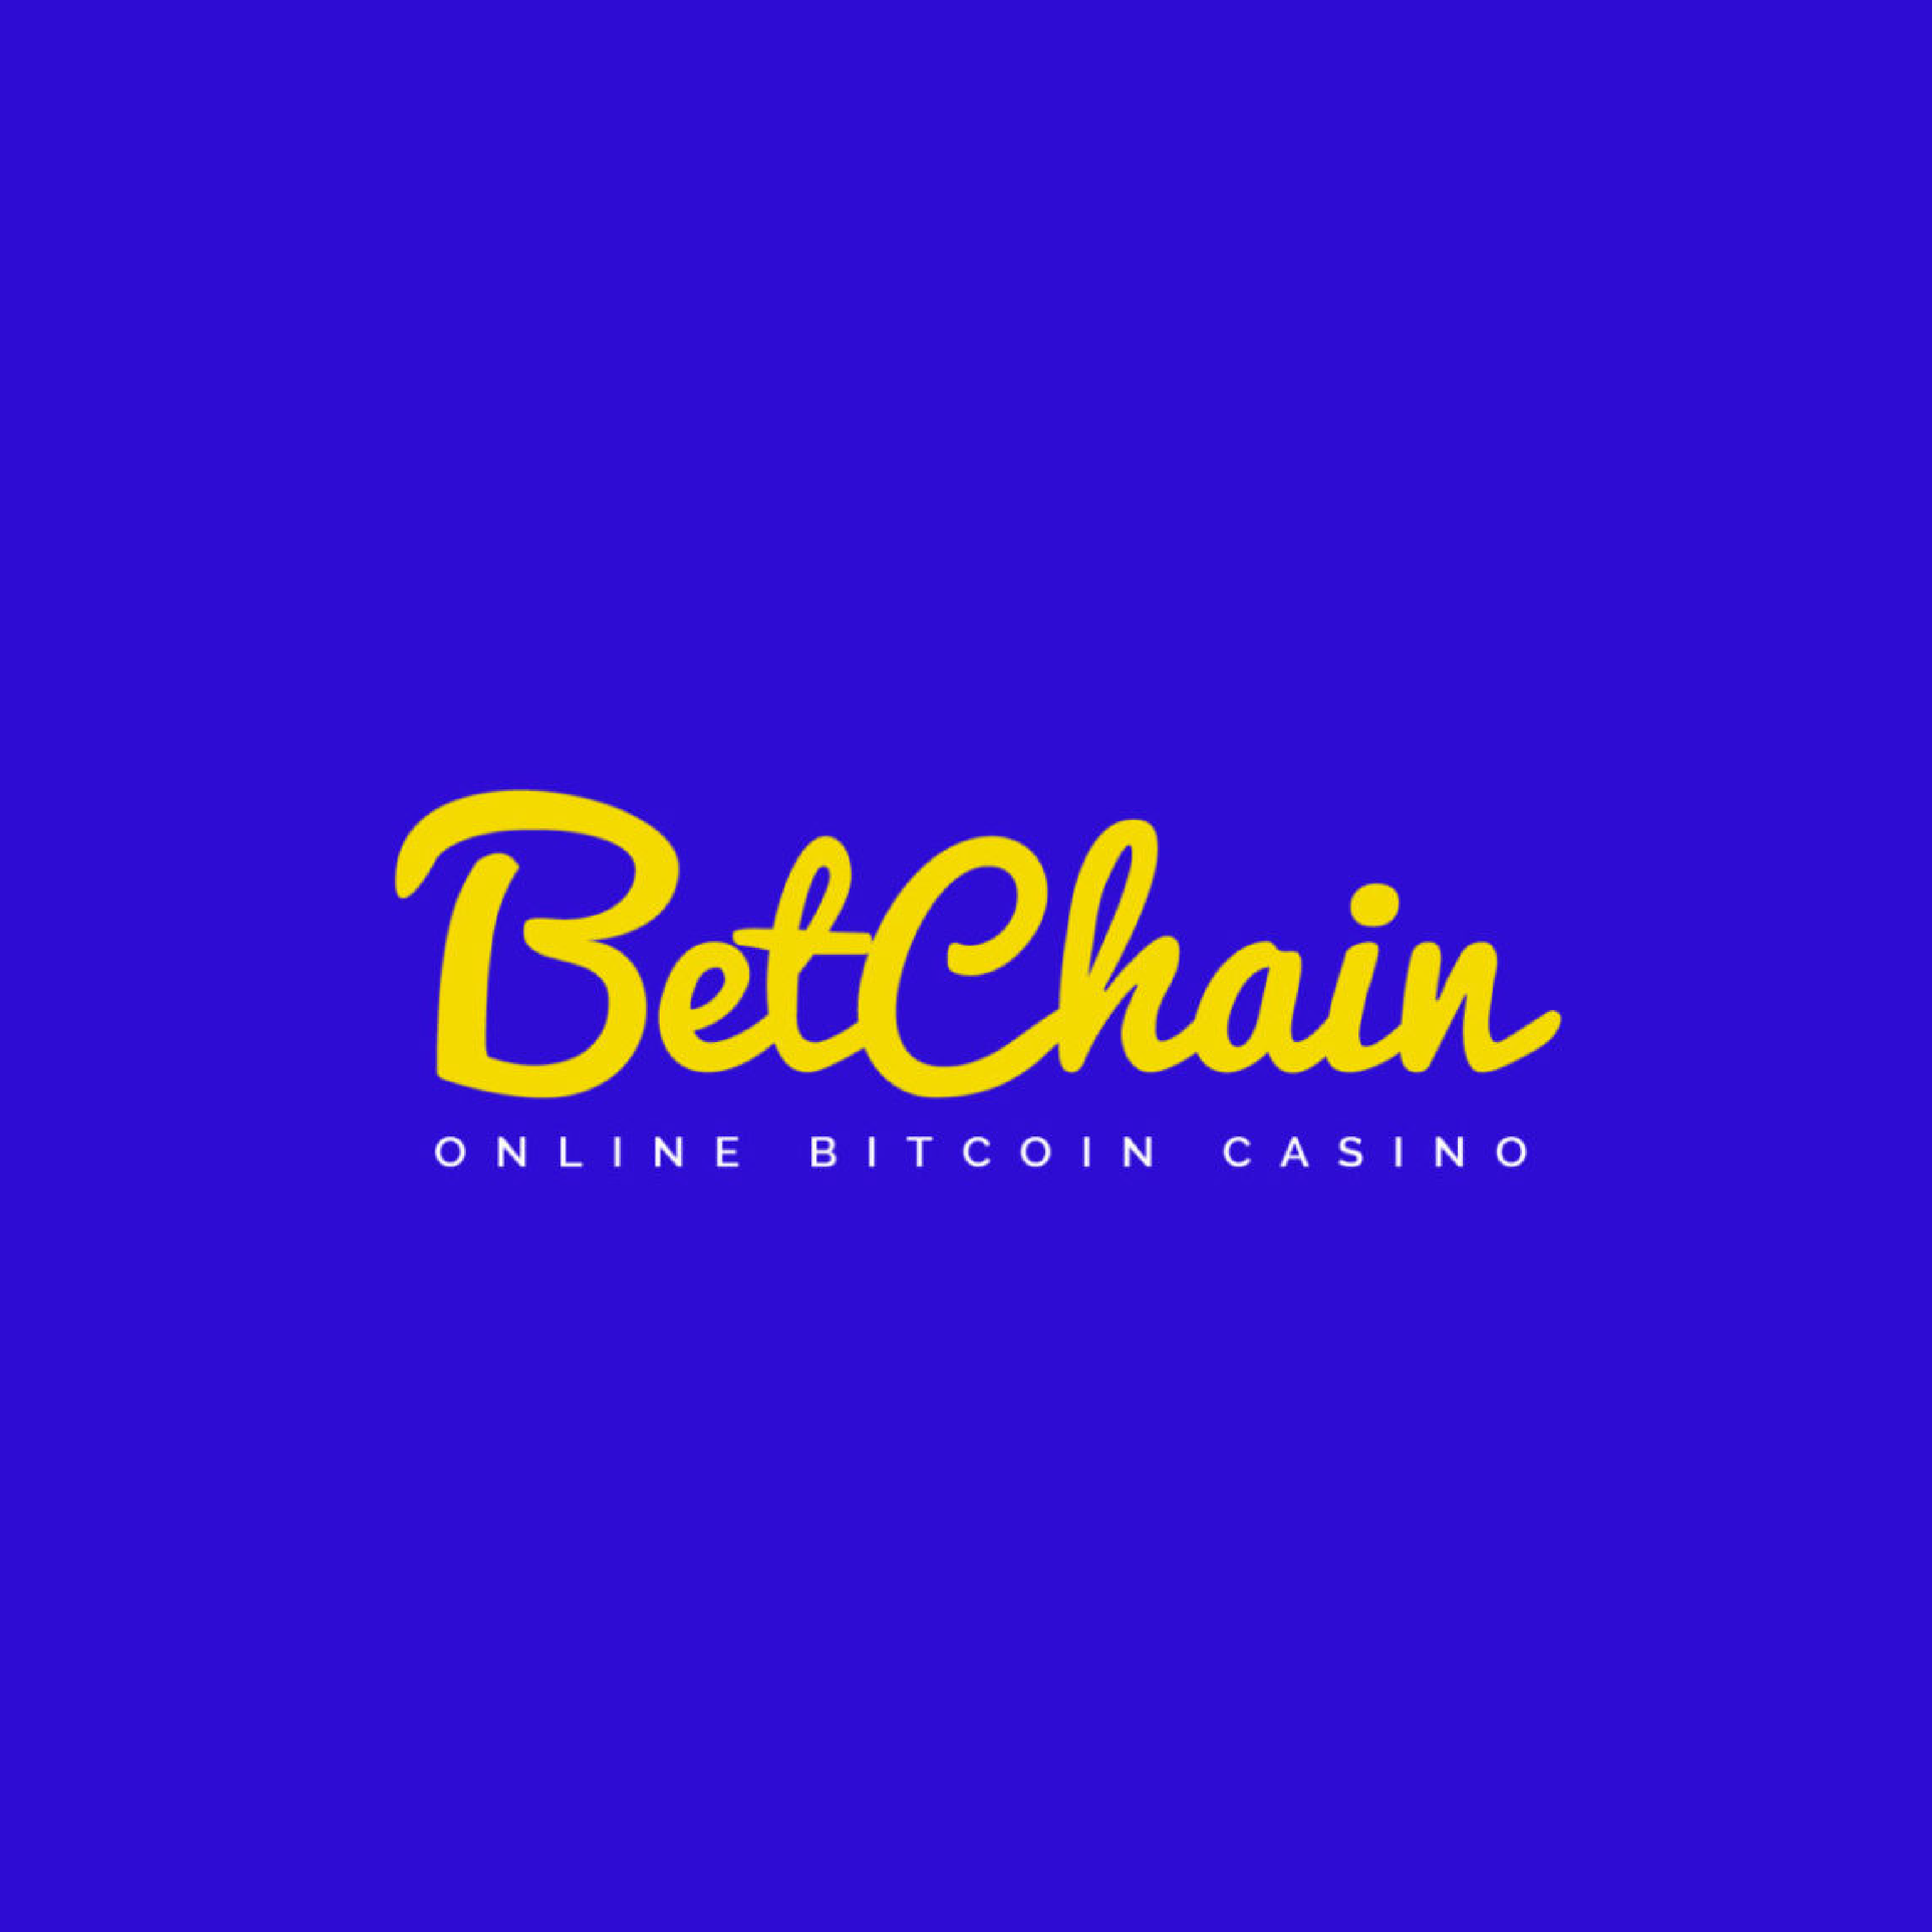 Bitstarz casino promo code